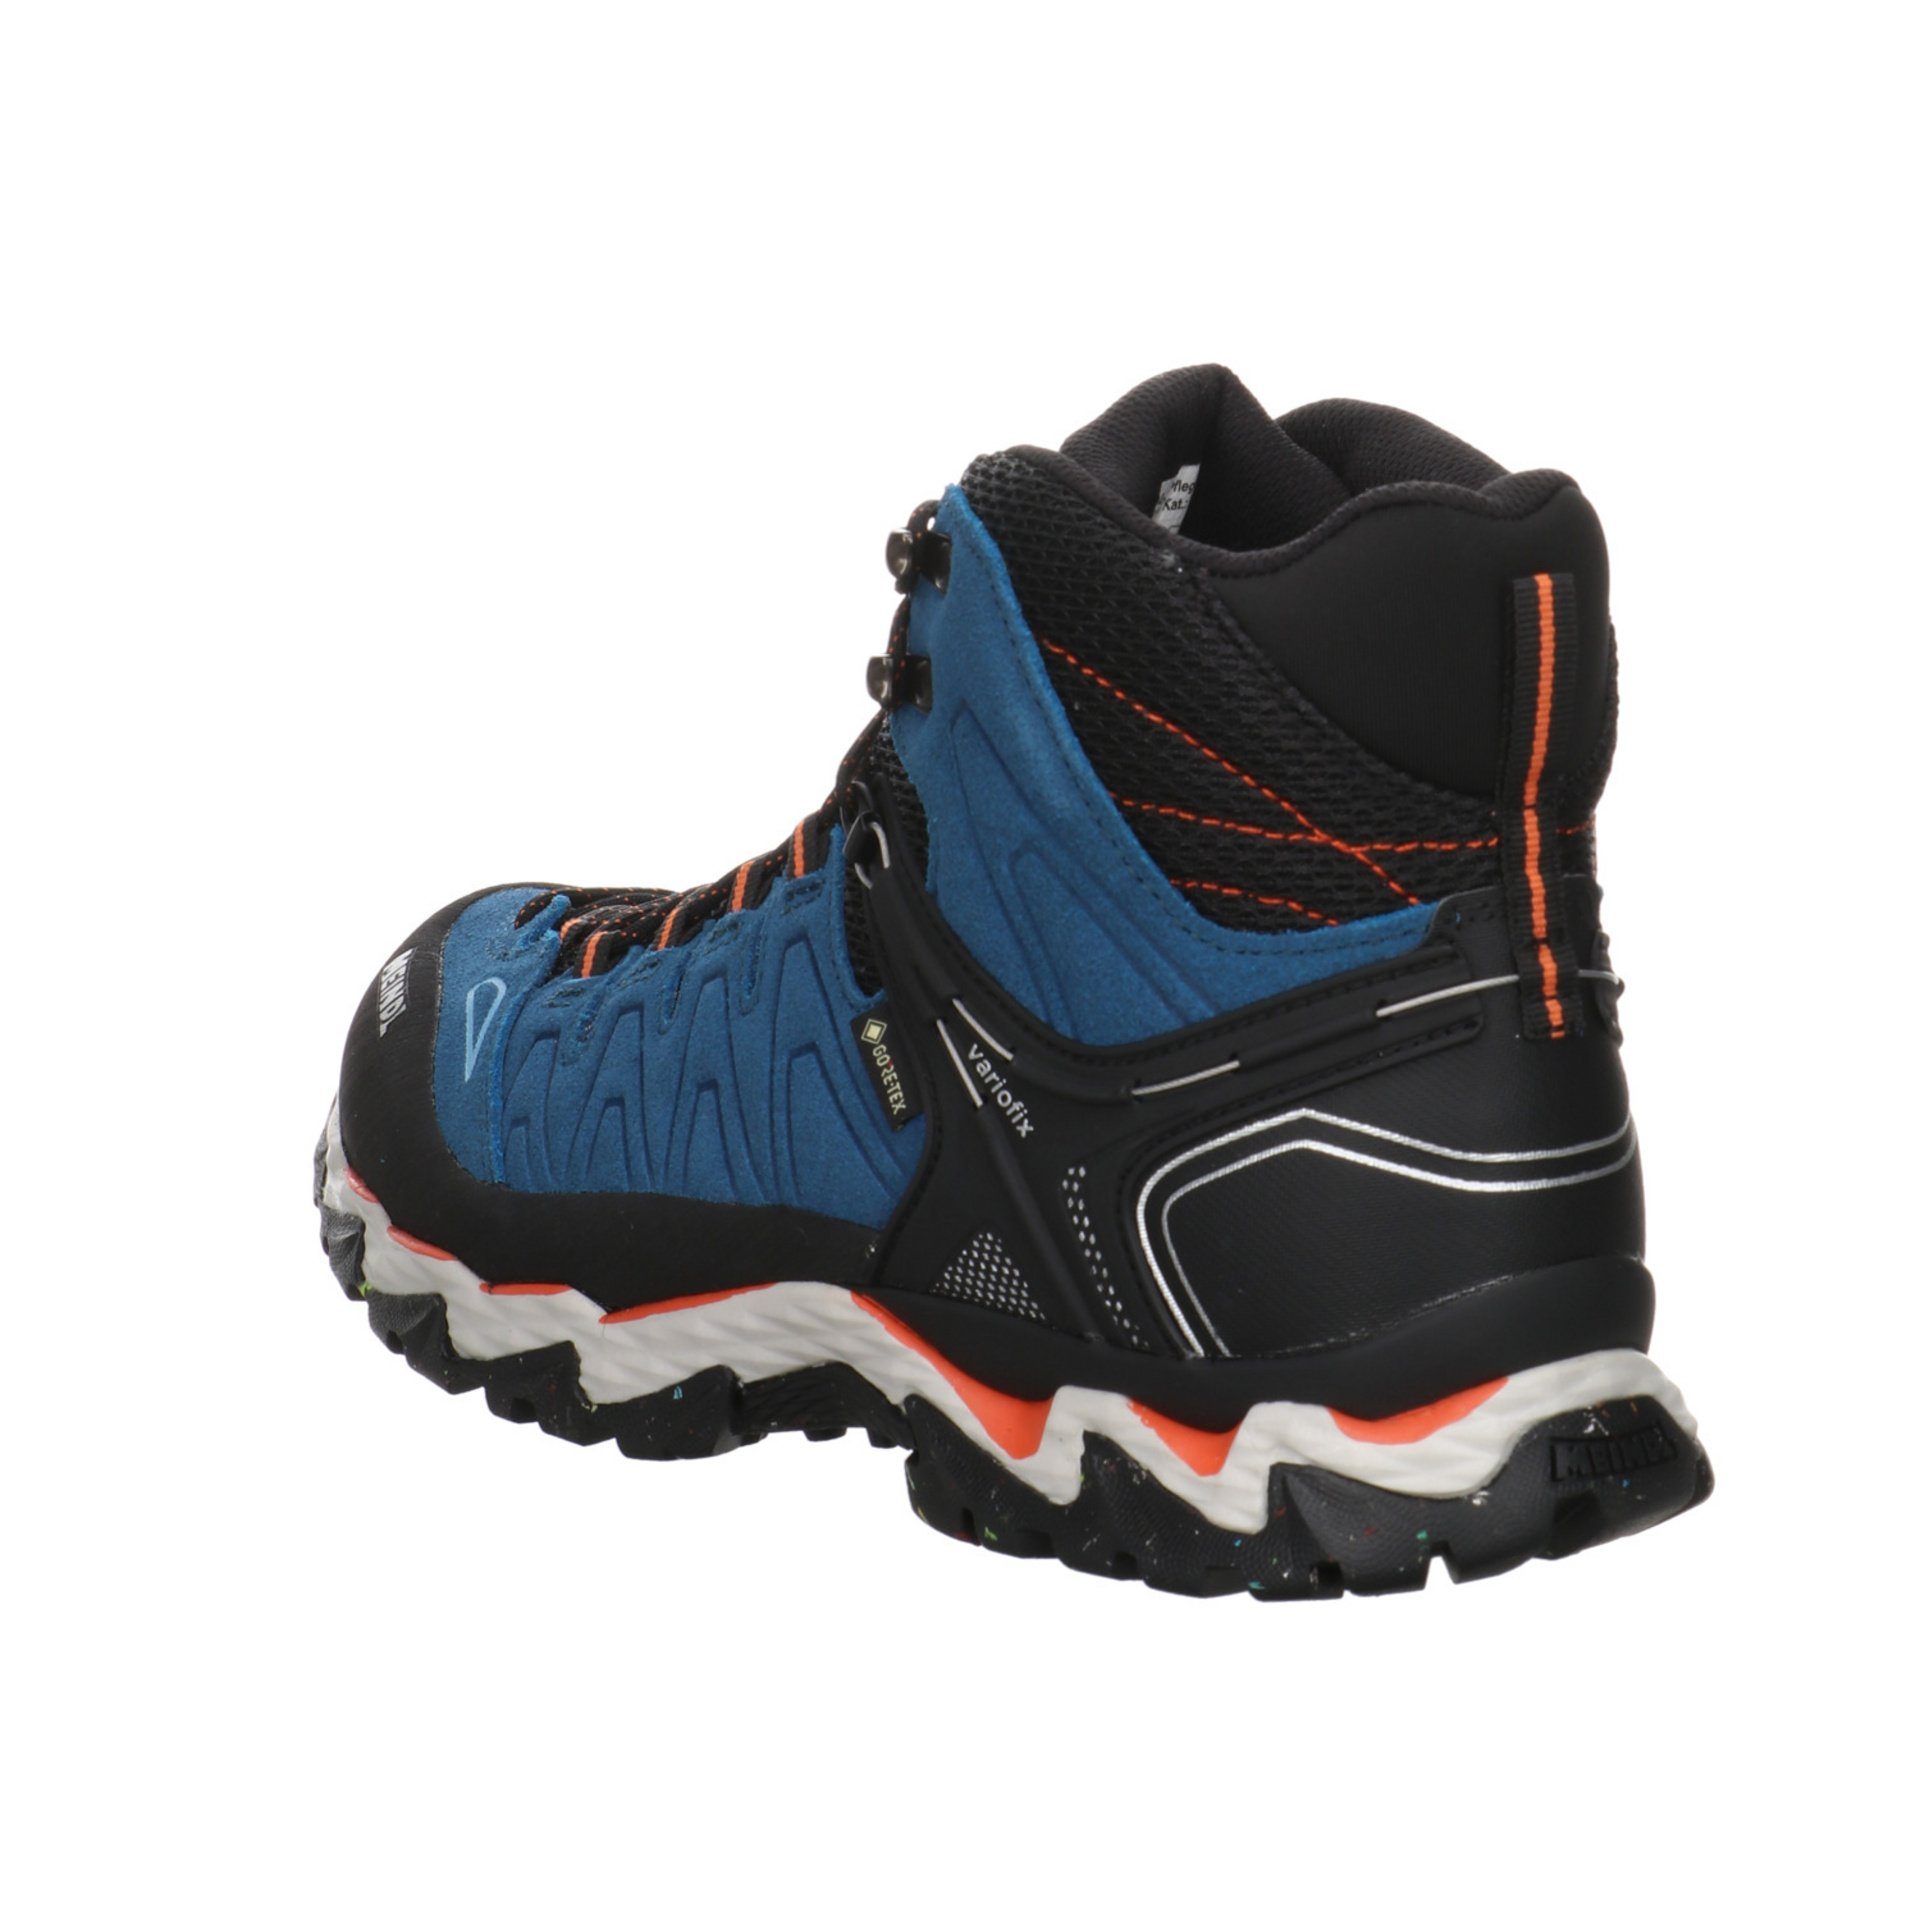 Meindl Herren Outdoor Schuhe blau/orange Outdoorschuh Leder-/Textilkombination Lite Hike Outdoorschuh GTX